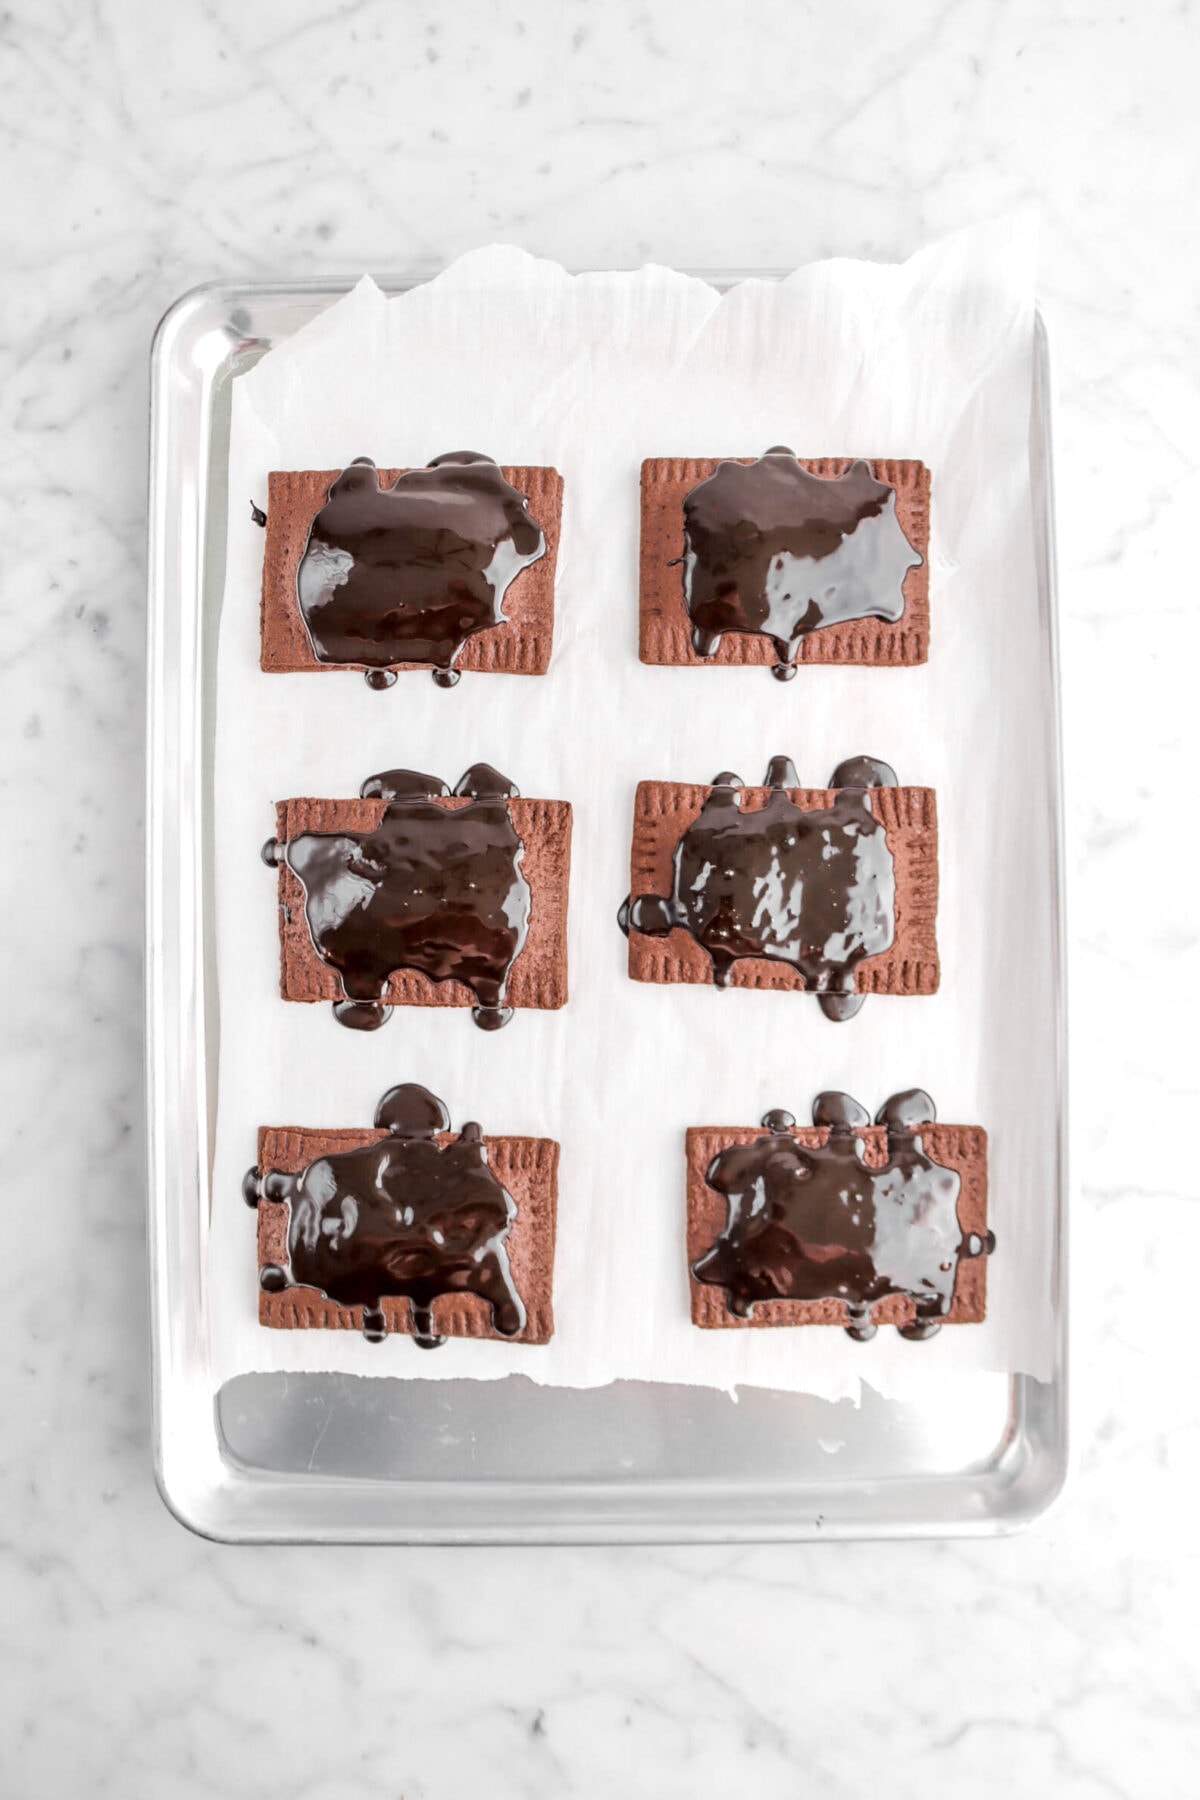 chocolate glaze spread over pop tarts